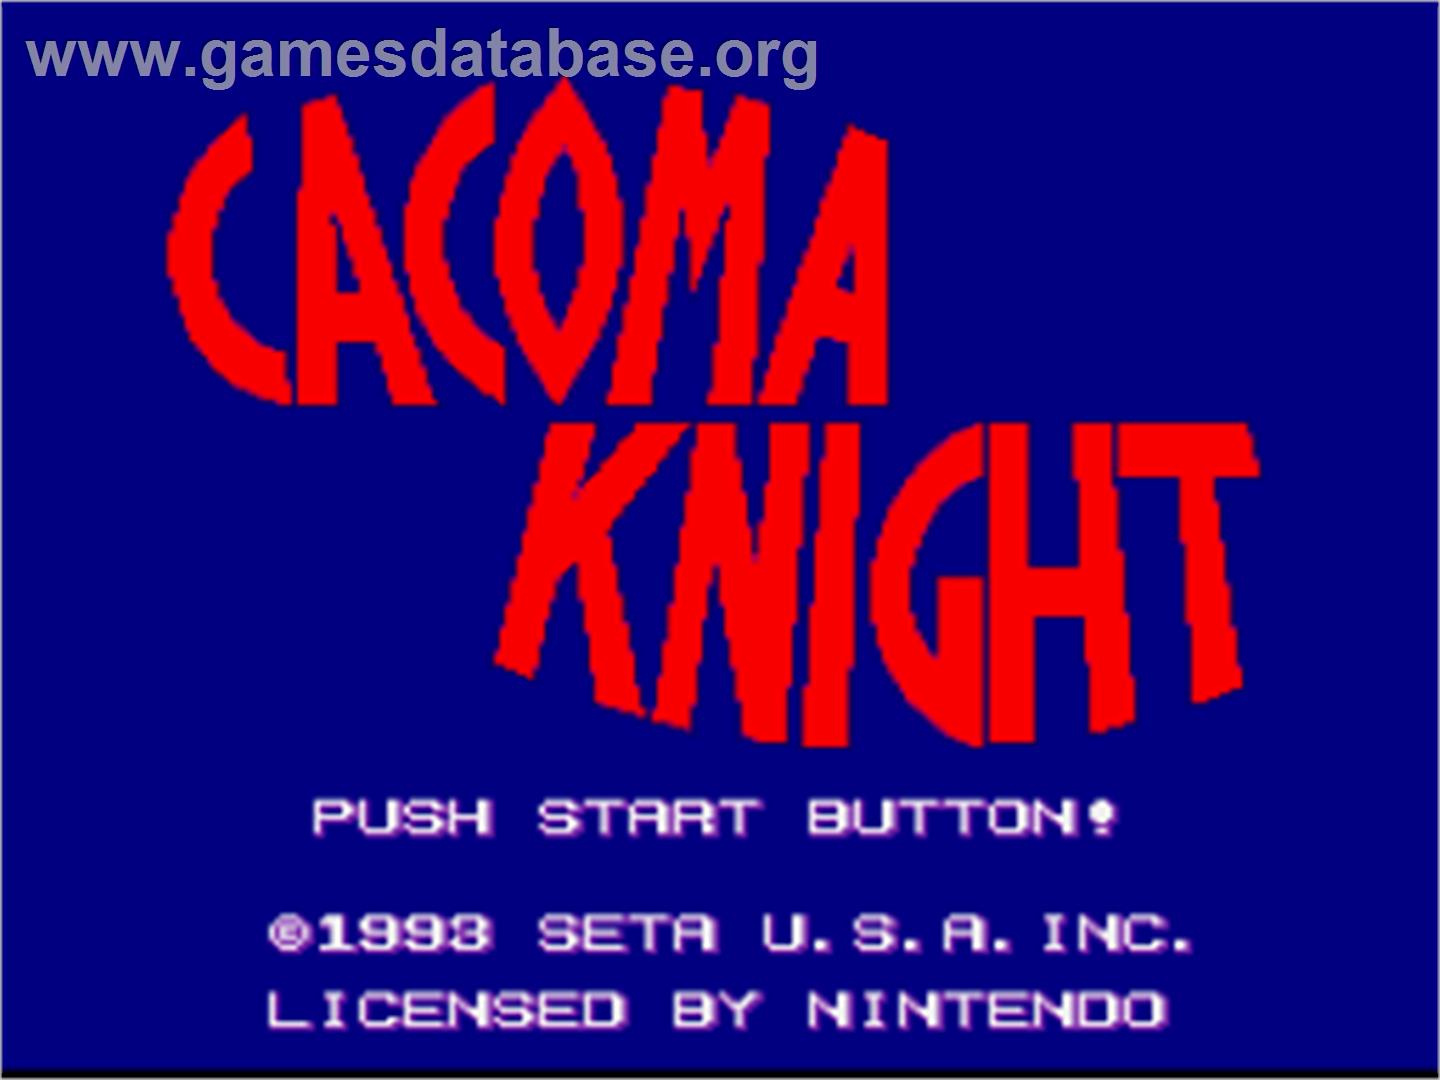 Cacoma Knight in Bizyland - Nintendo SNES - Artwork - Title Screen